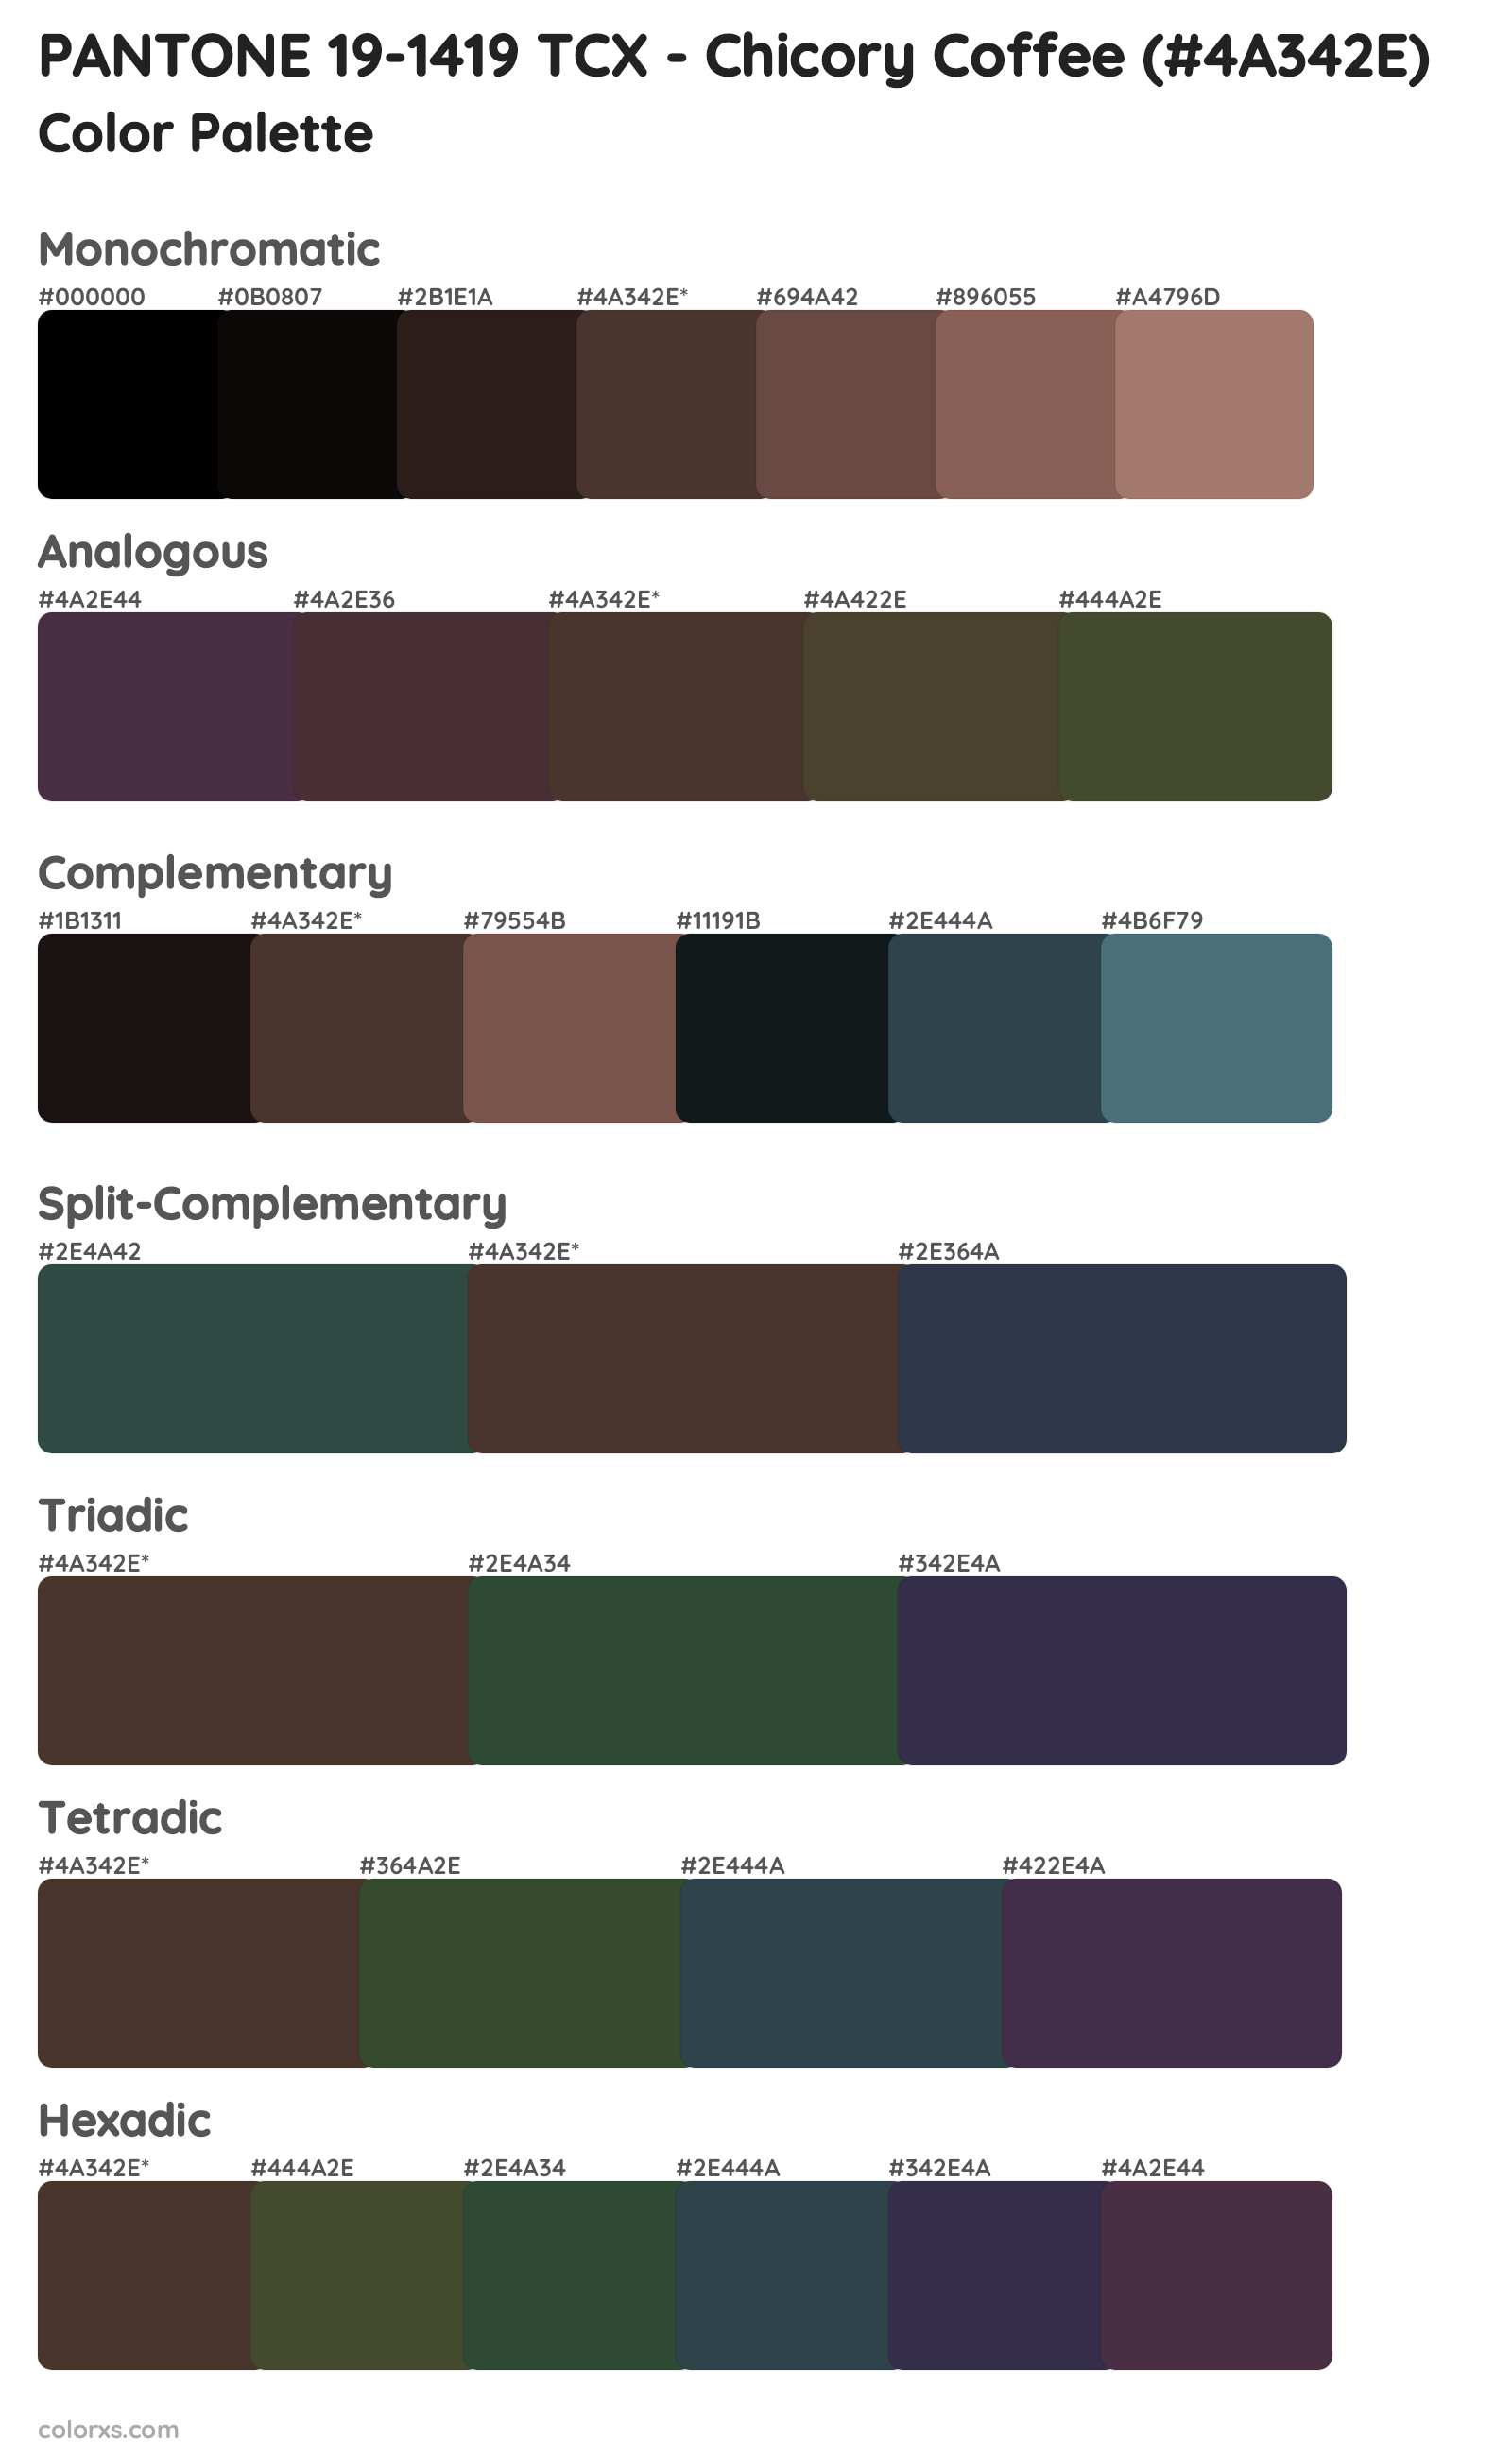 PANTONE 19-1419 TCX - Chicory Coffee Color Scheme Palettes